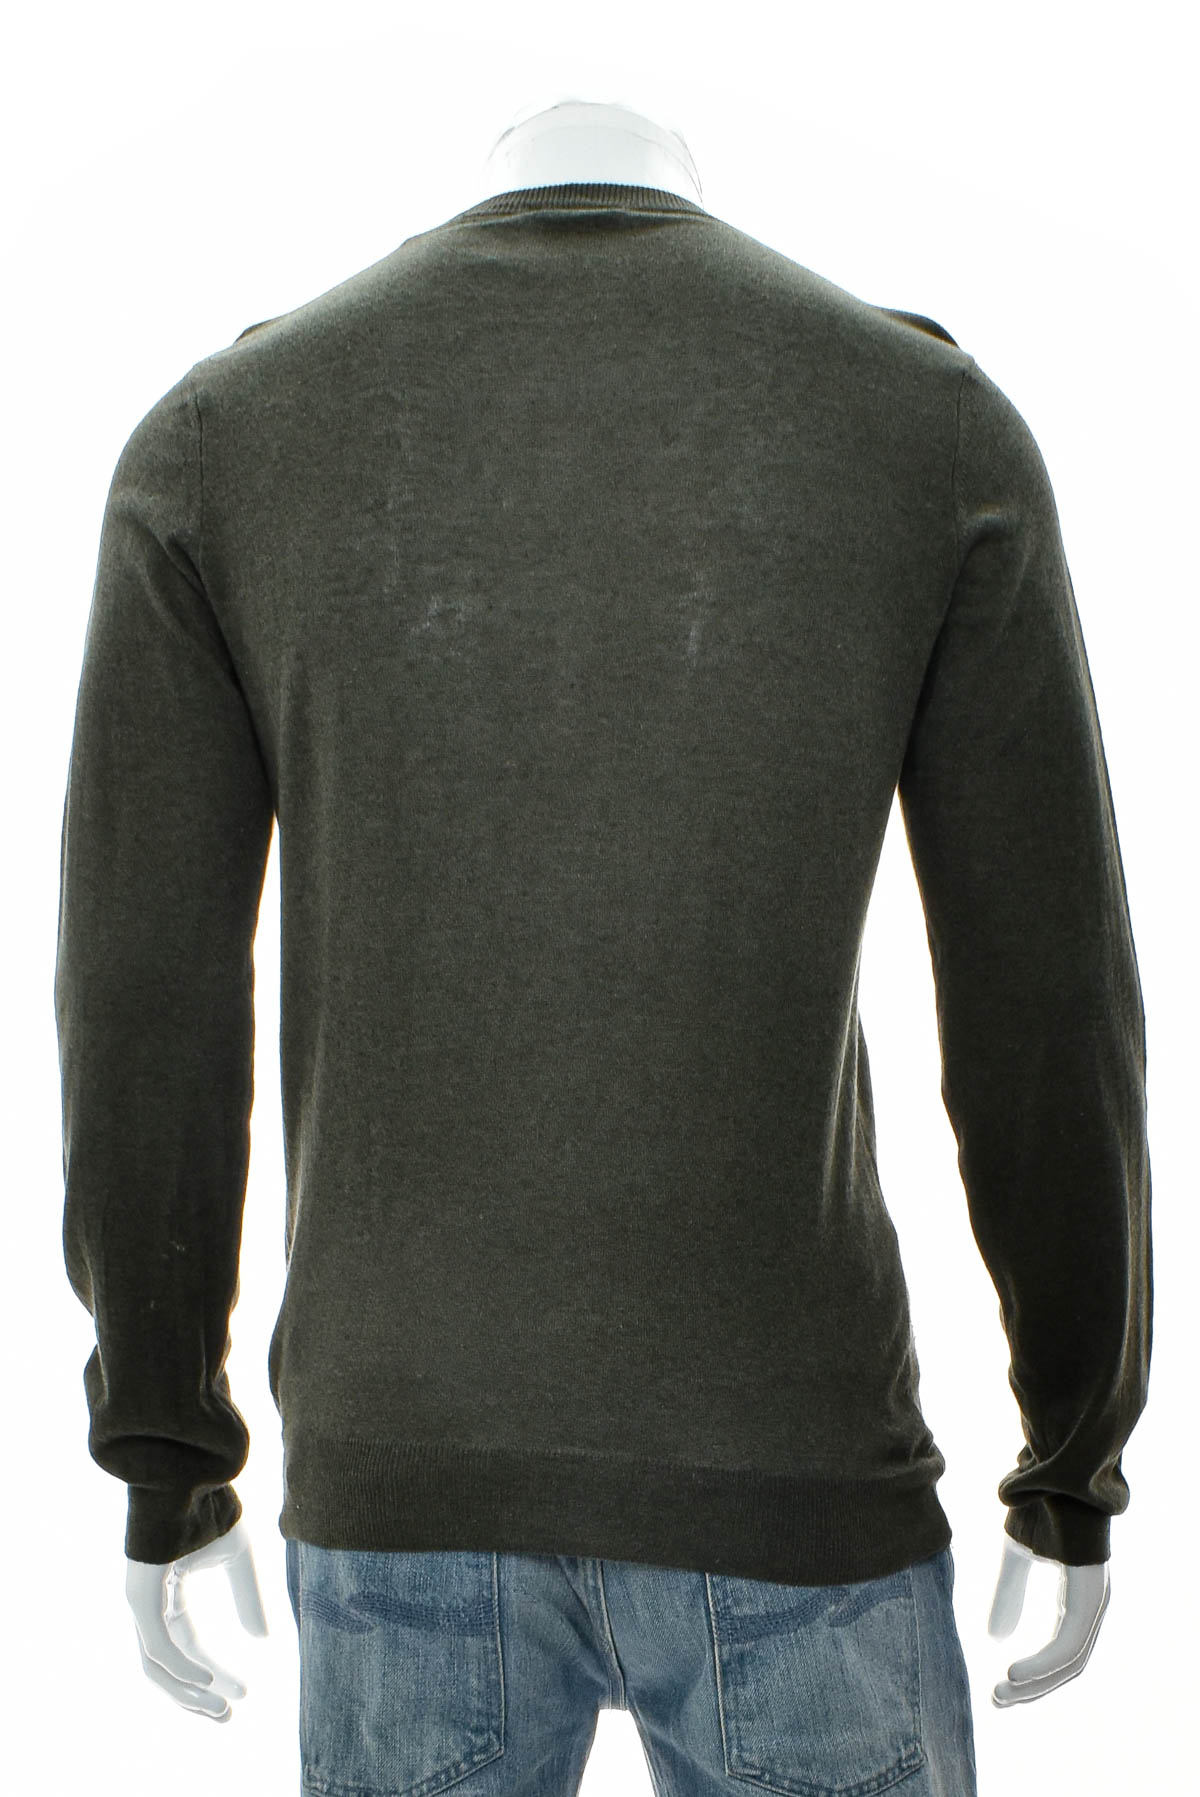 Men's sweater - Oscar Jacobson - 1